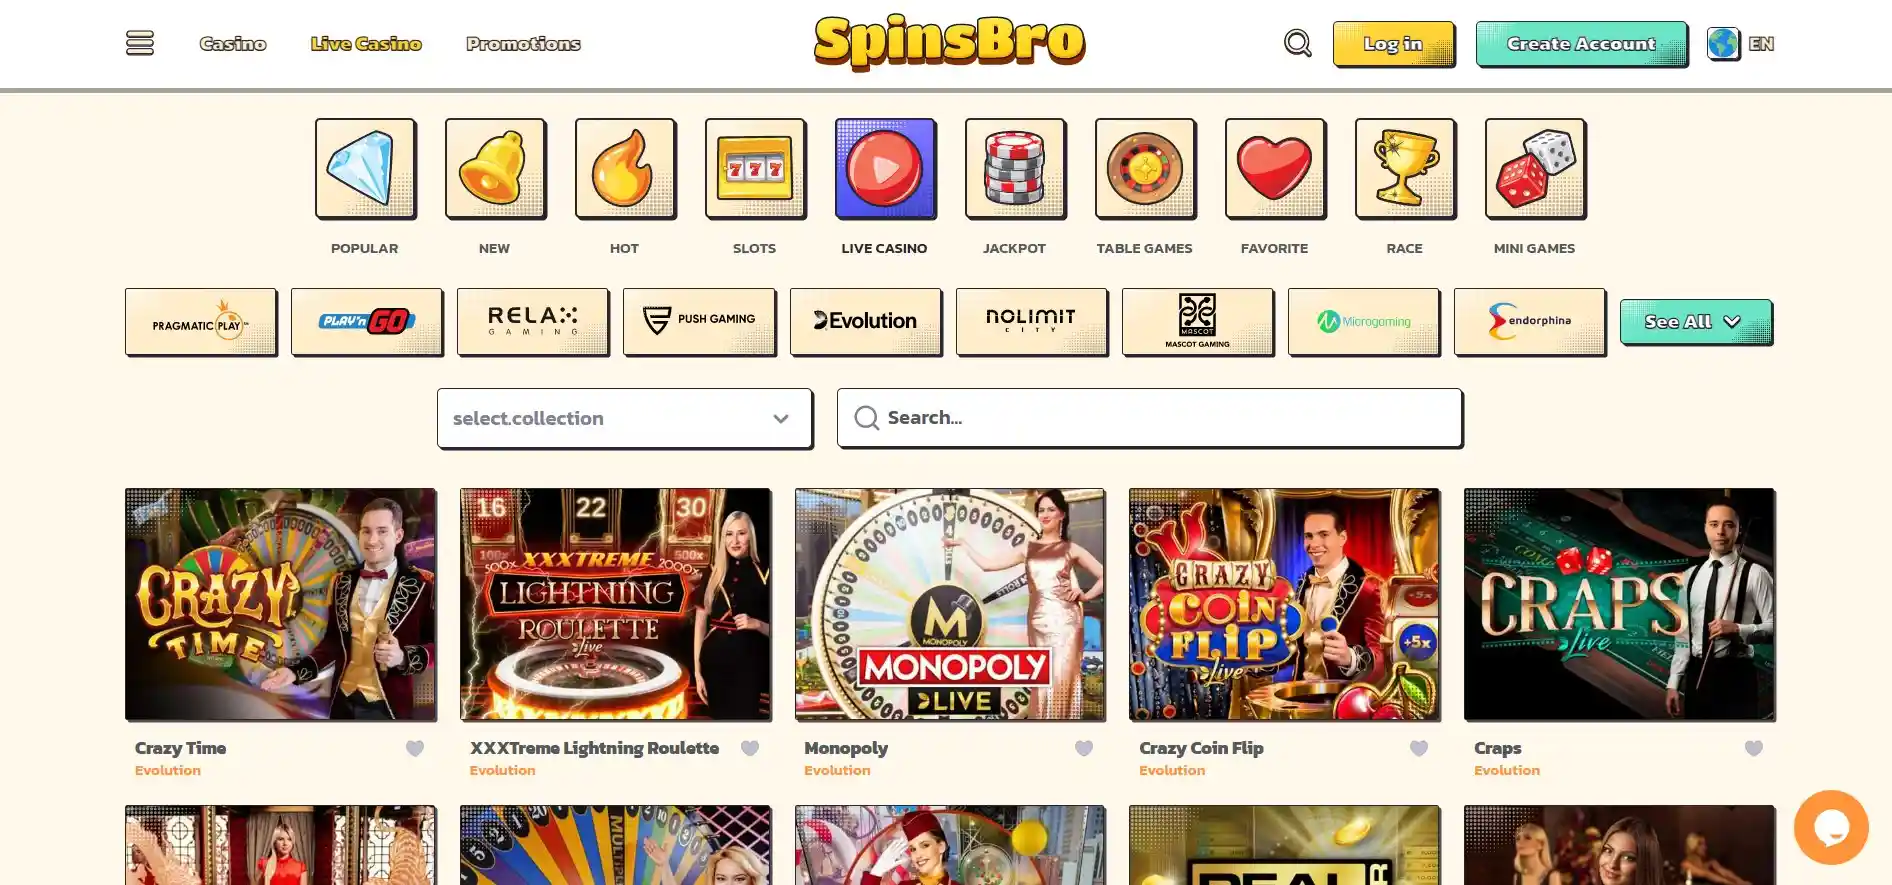 Online casino Spinsbro games